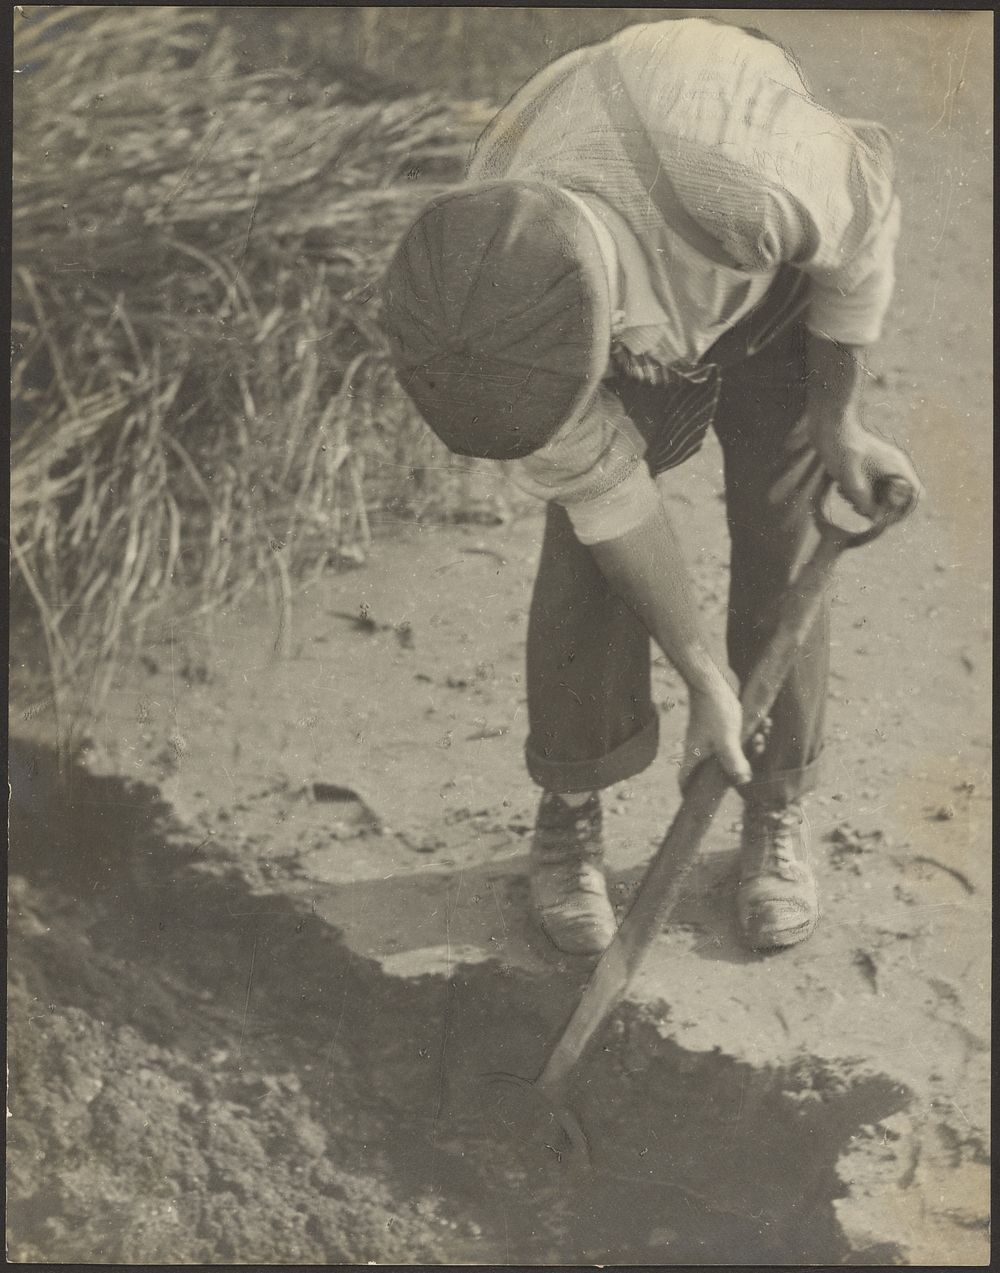 Man Digging in Mud by Louis Fleckenstein